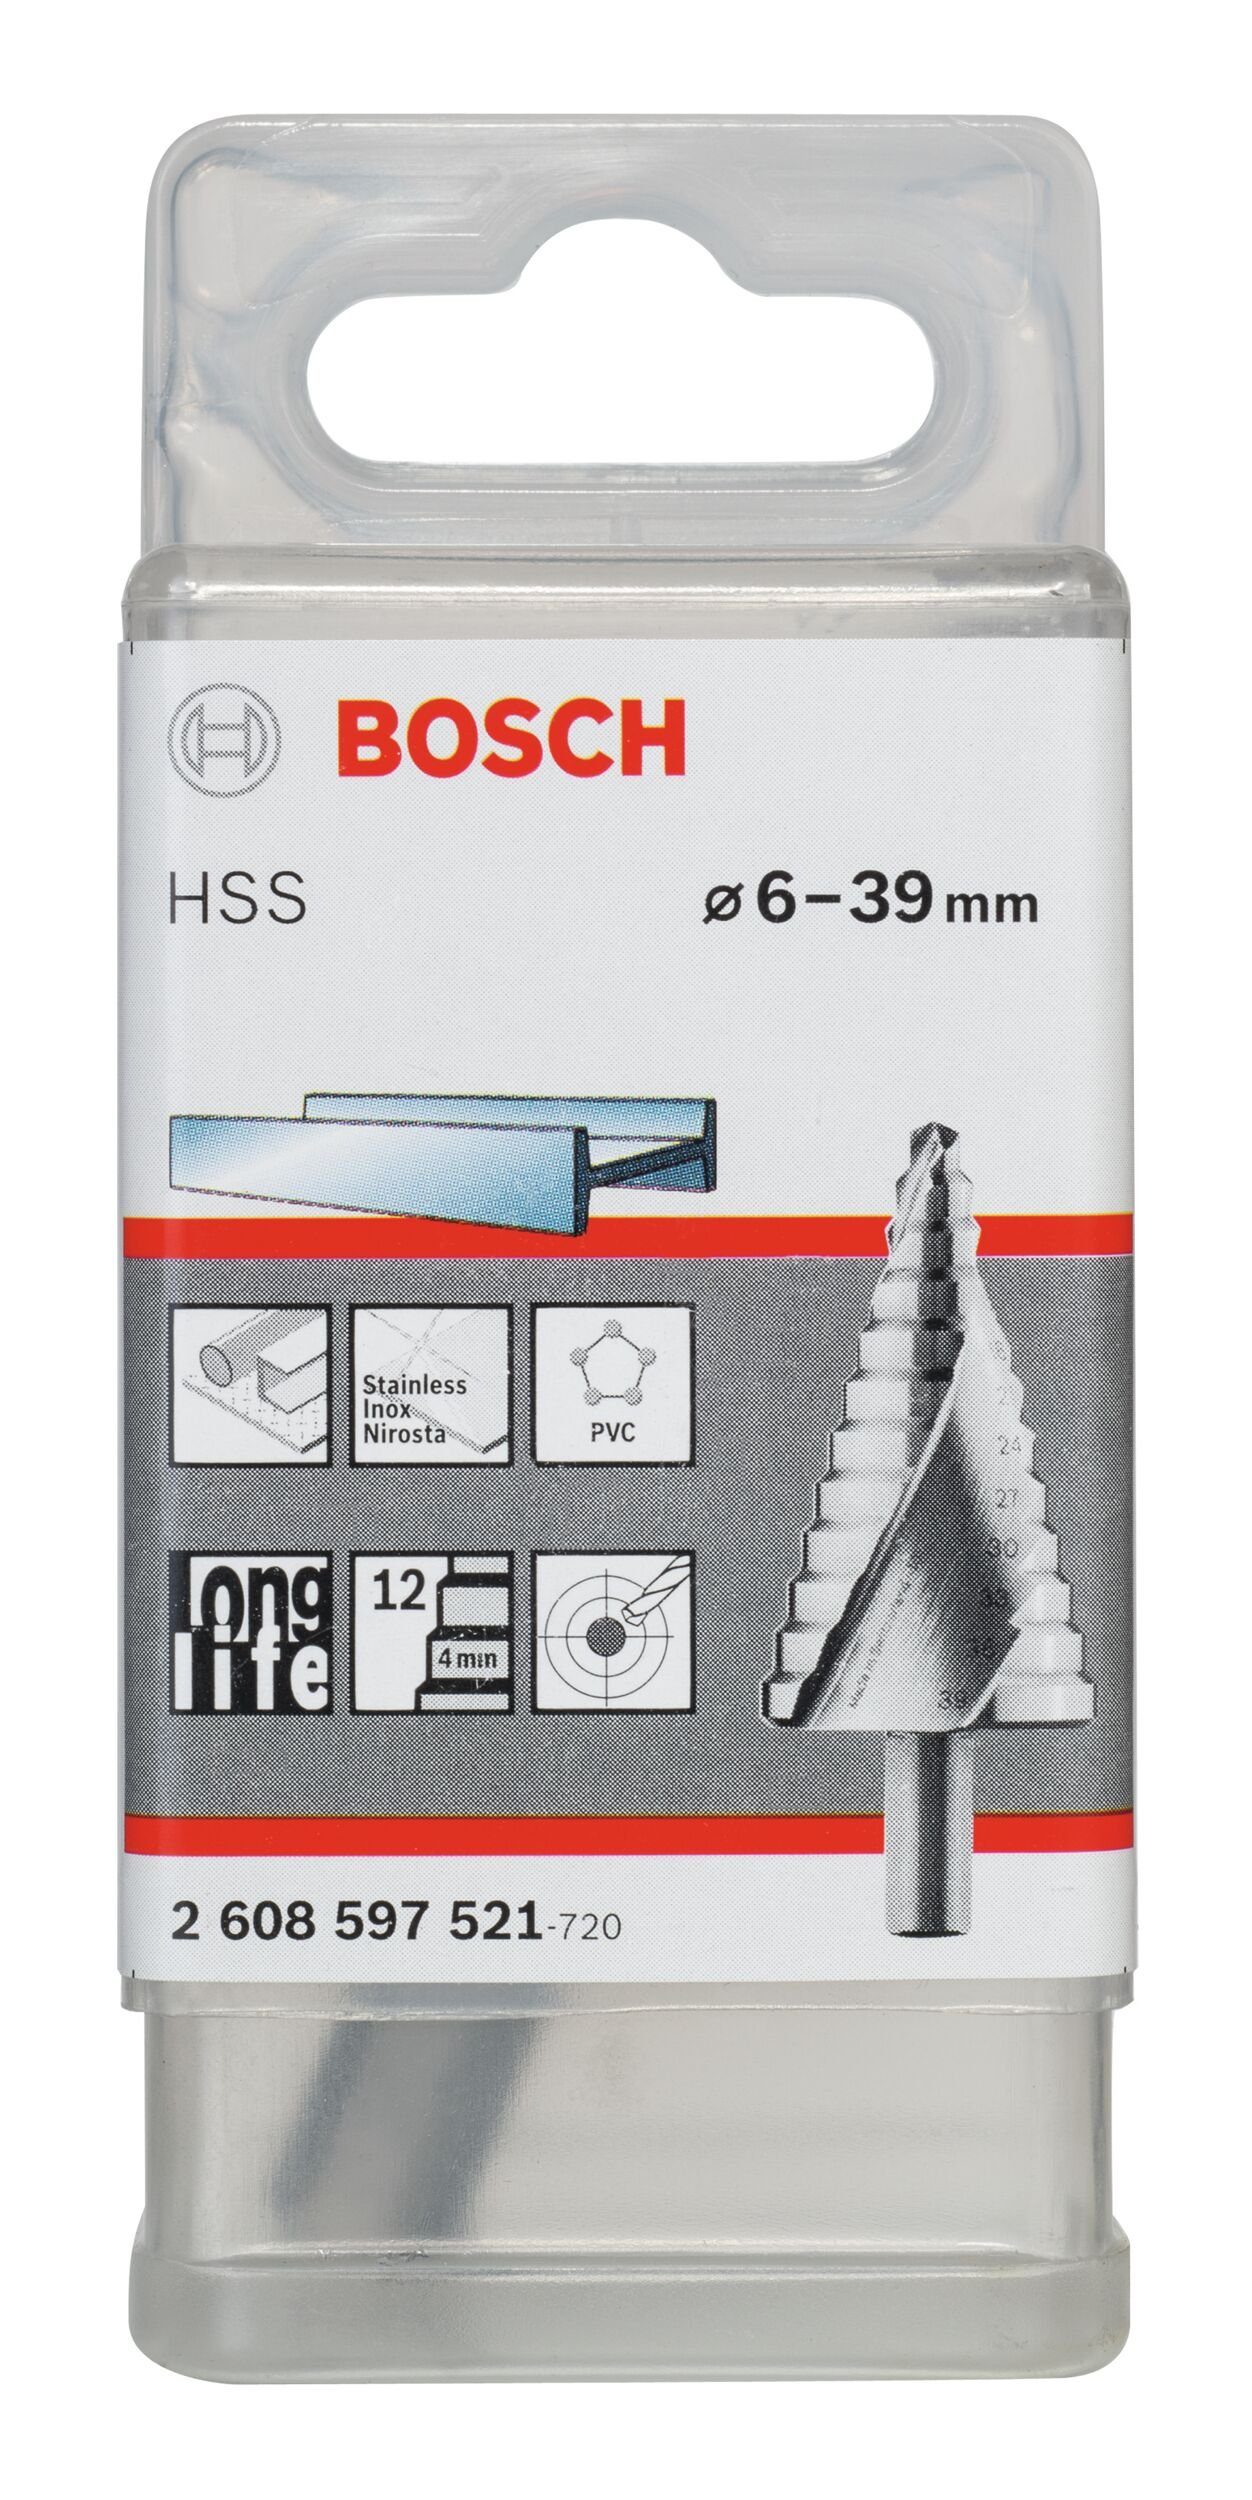 BOSCH Metallbohrer, HSS mm 93,5 39 - x - 6 Stufen Stufenbohrer x 10 13